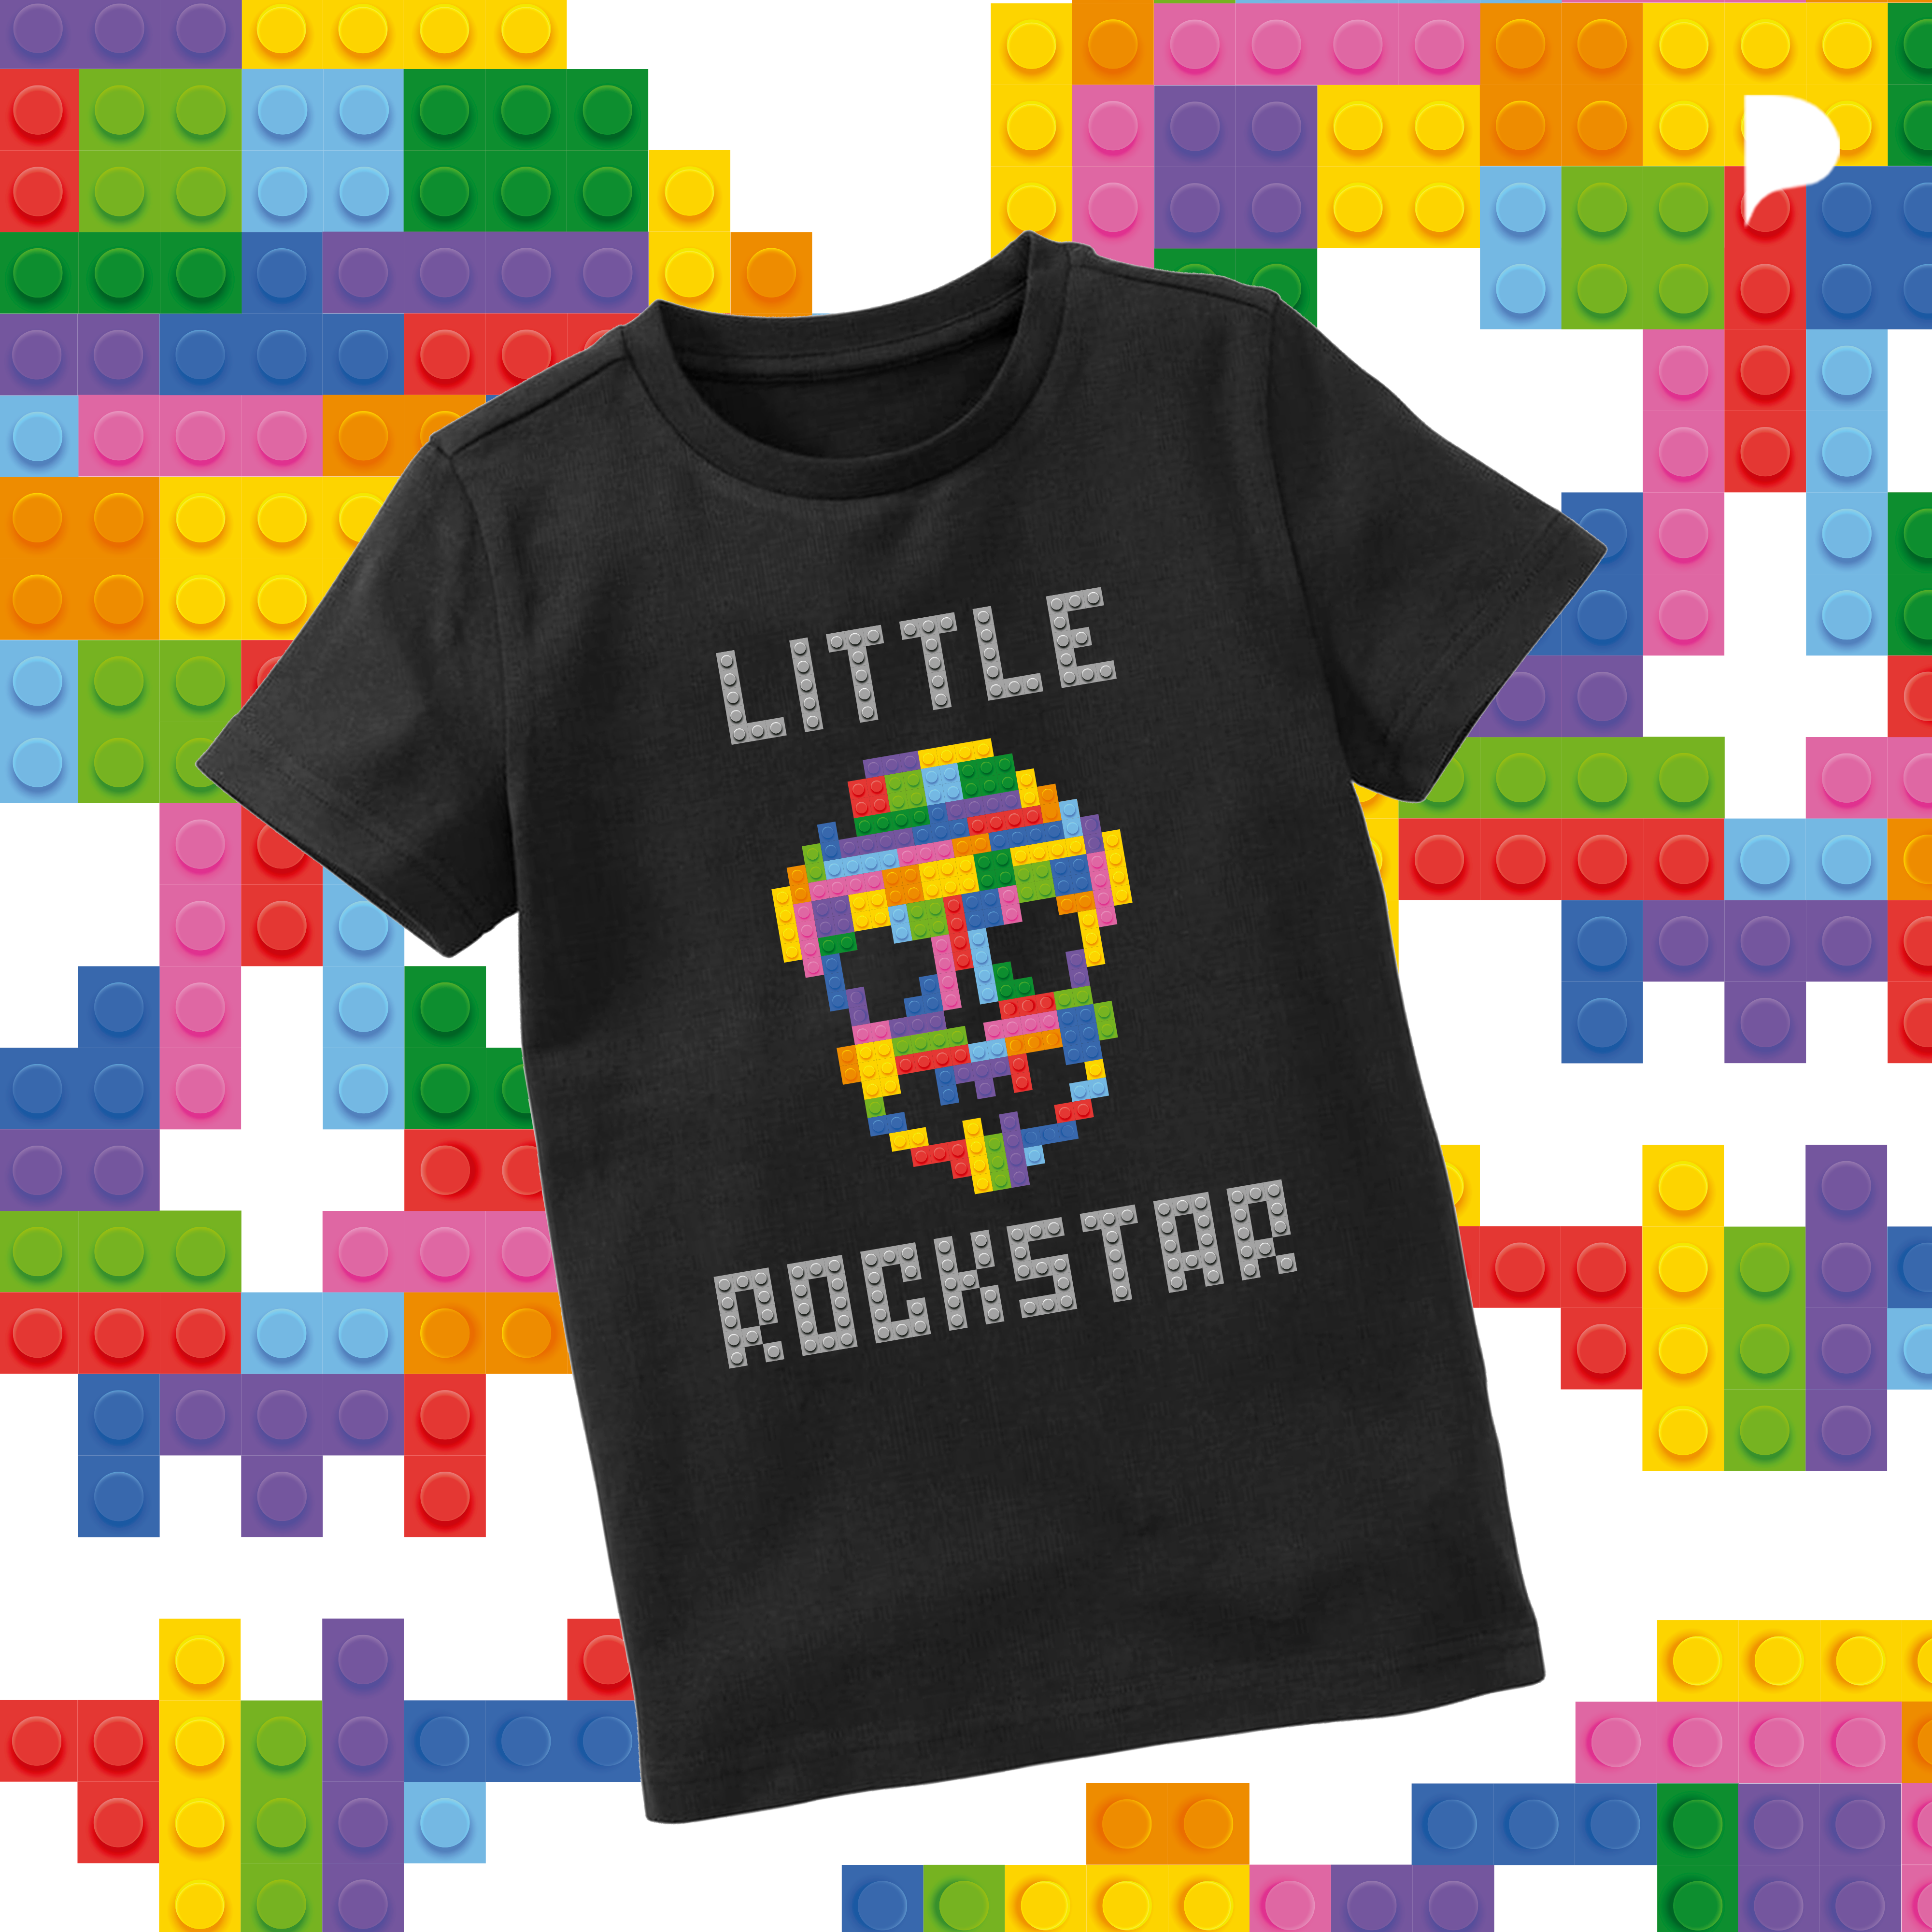 Playera Kids Unisex - Don Gorri Little Rockstar